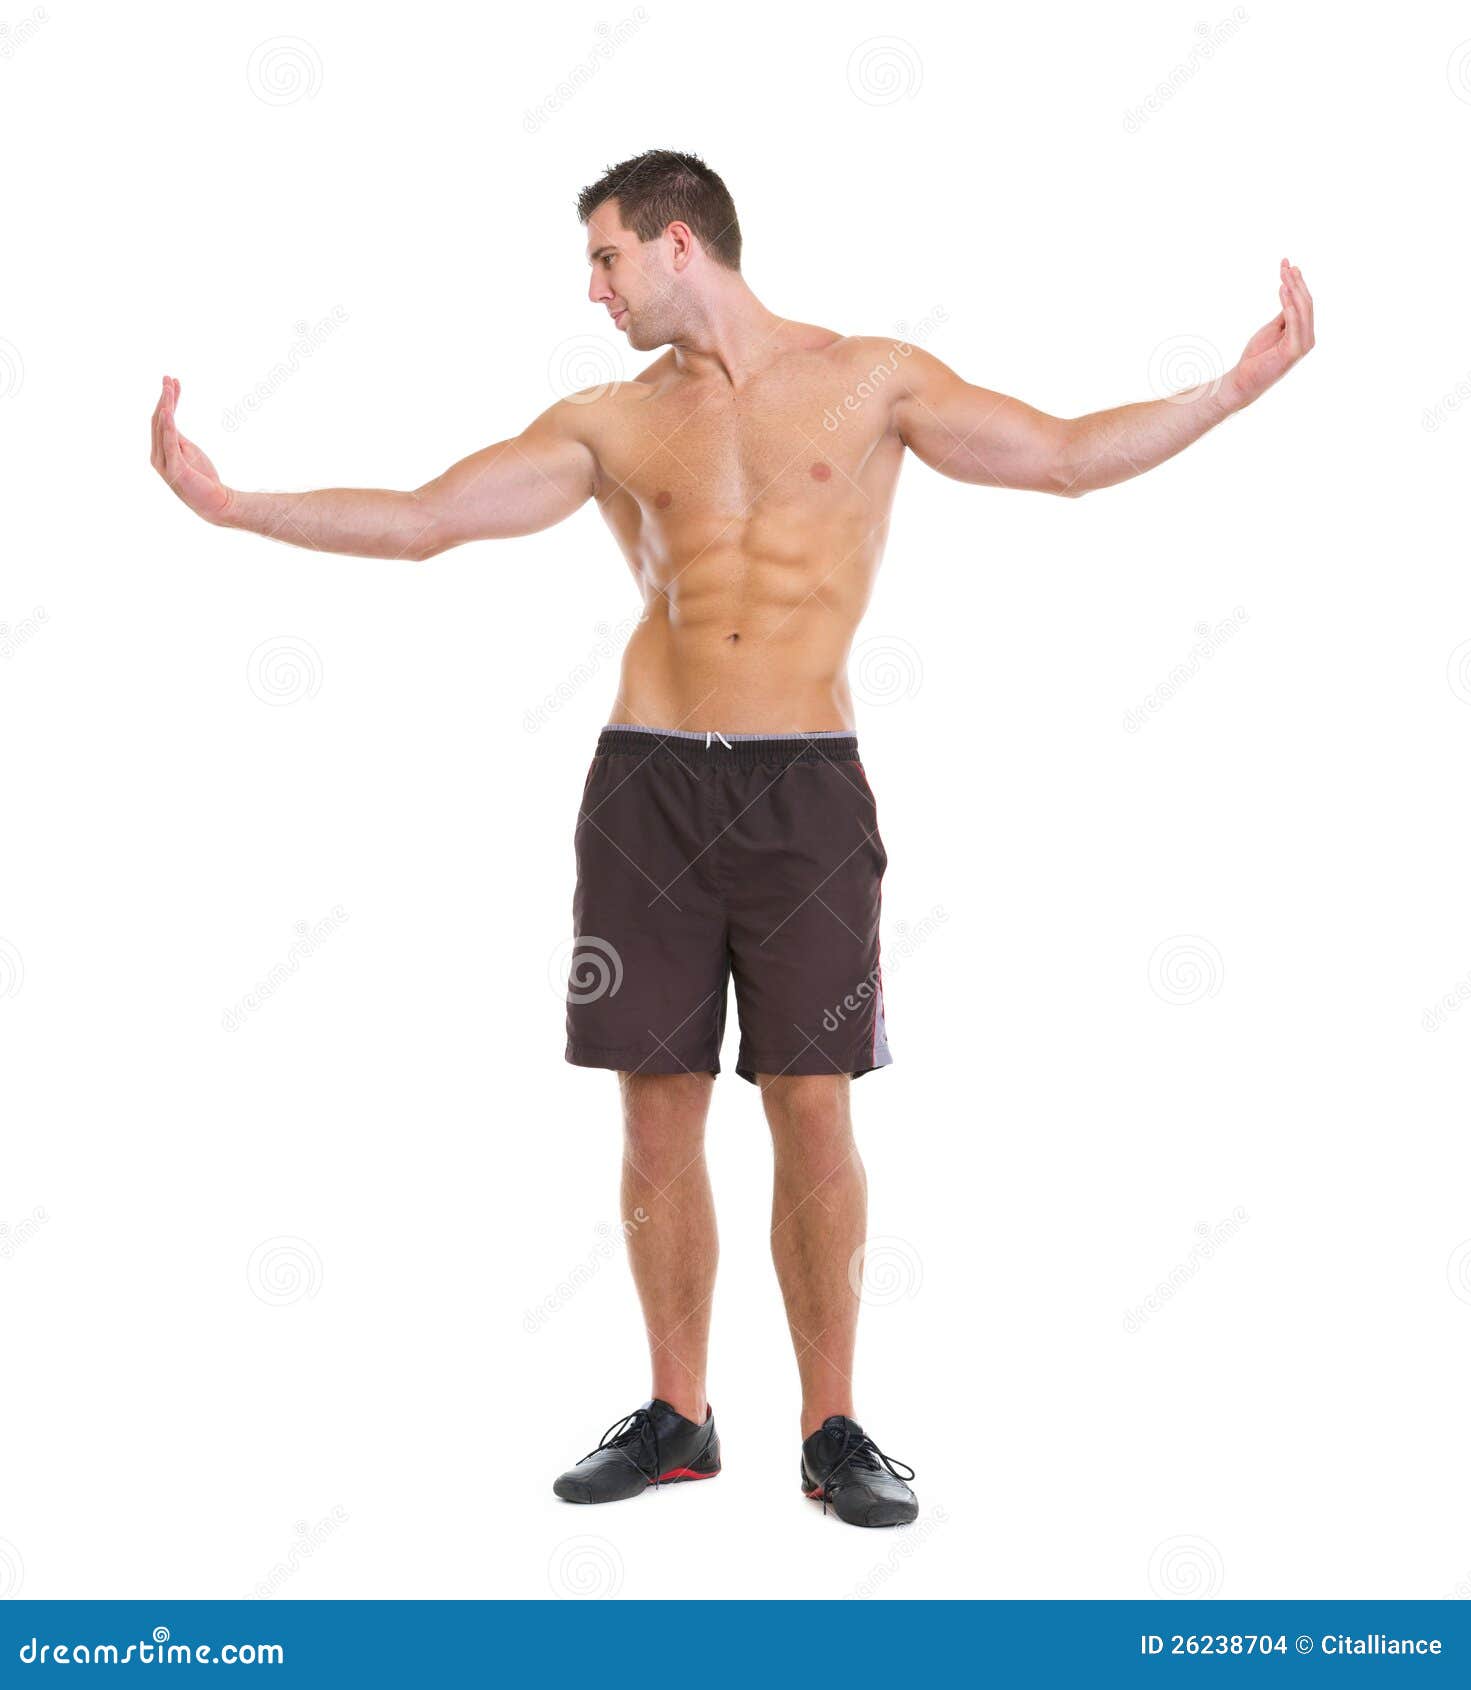 healthy-man-showing-muscular-body-26238704.jpg